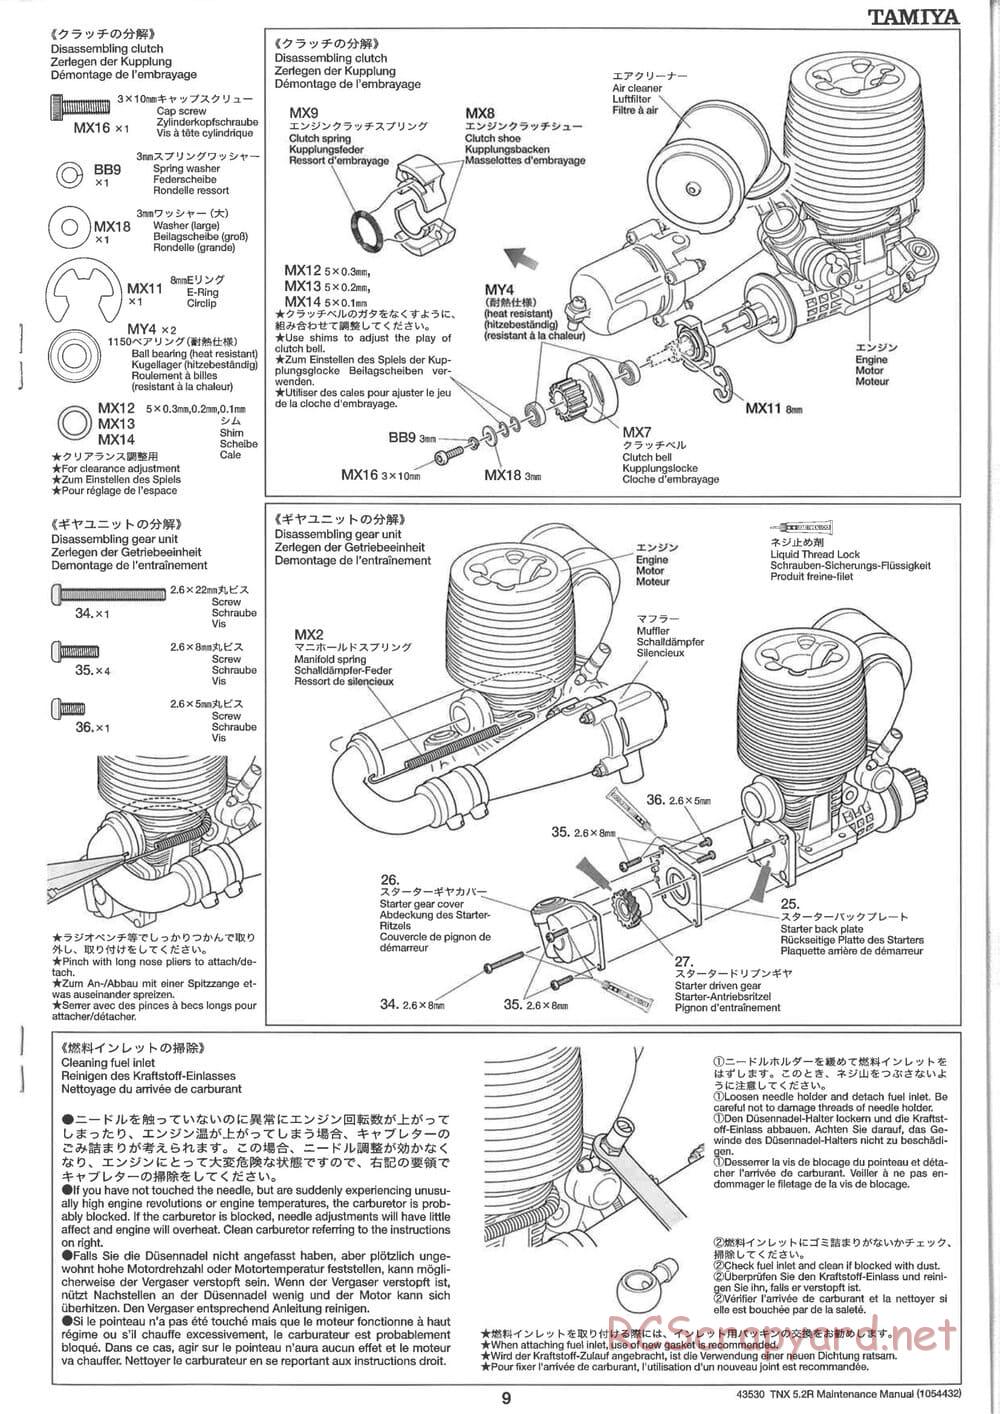 Tamiya - TNX 5.2R - TGM-04 - Maintenance Manual - Page 9